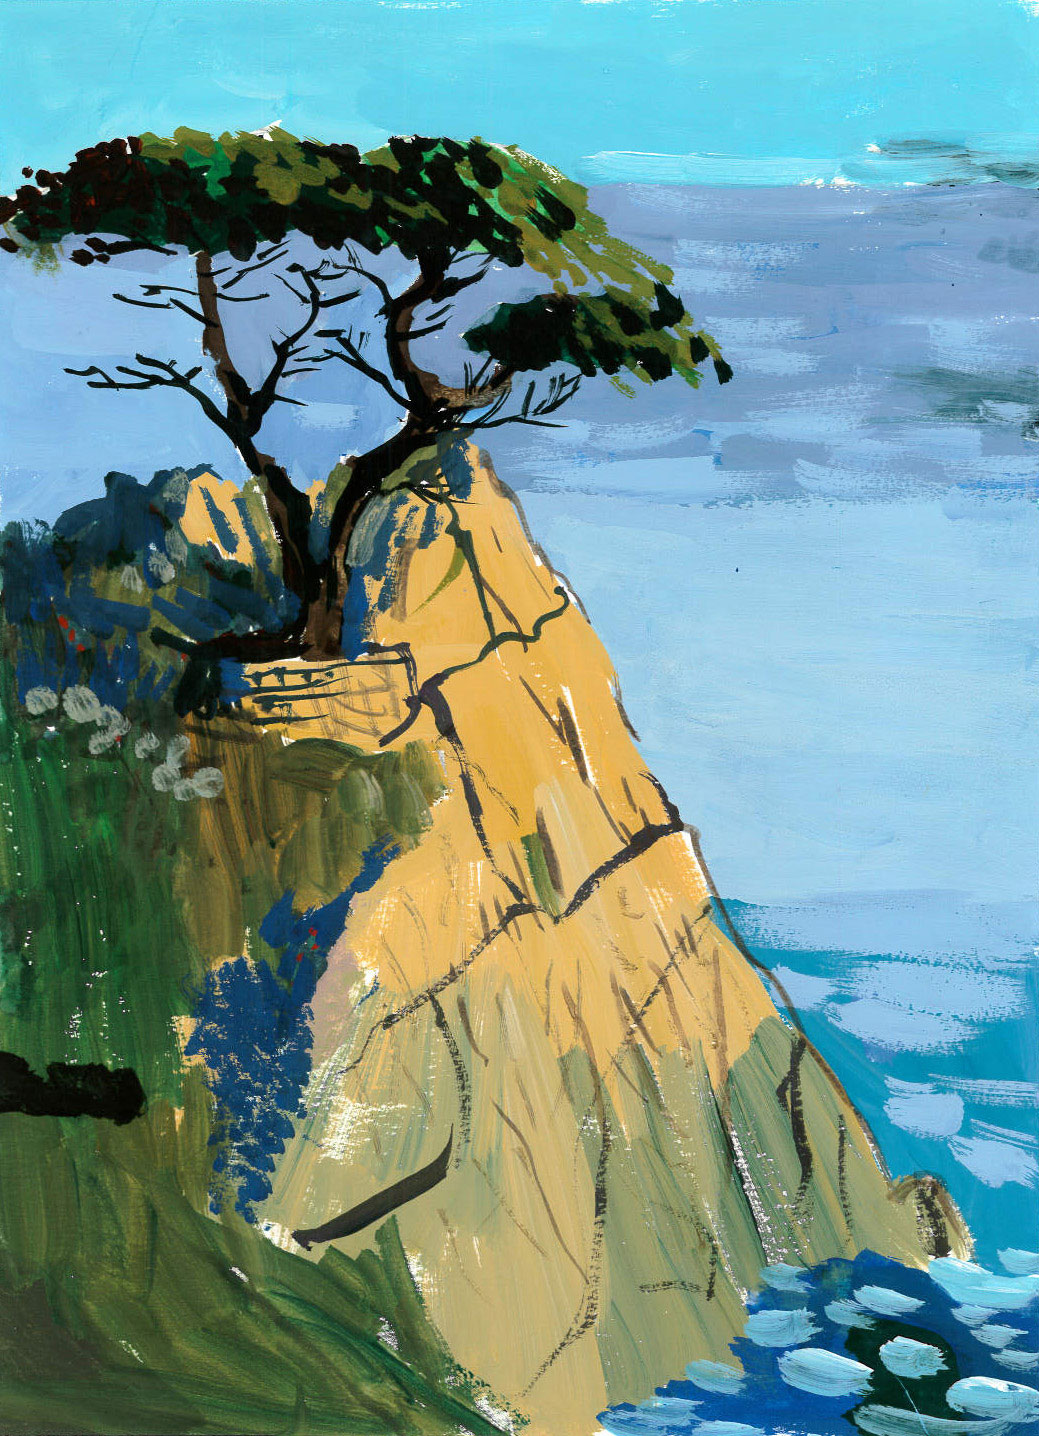 Painting of cypress tree overlooking the ocean